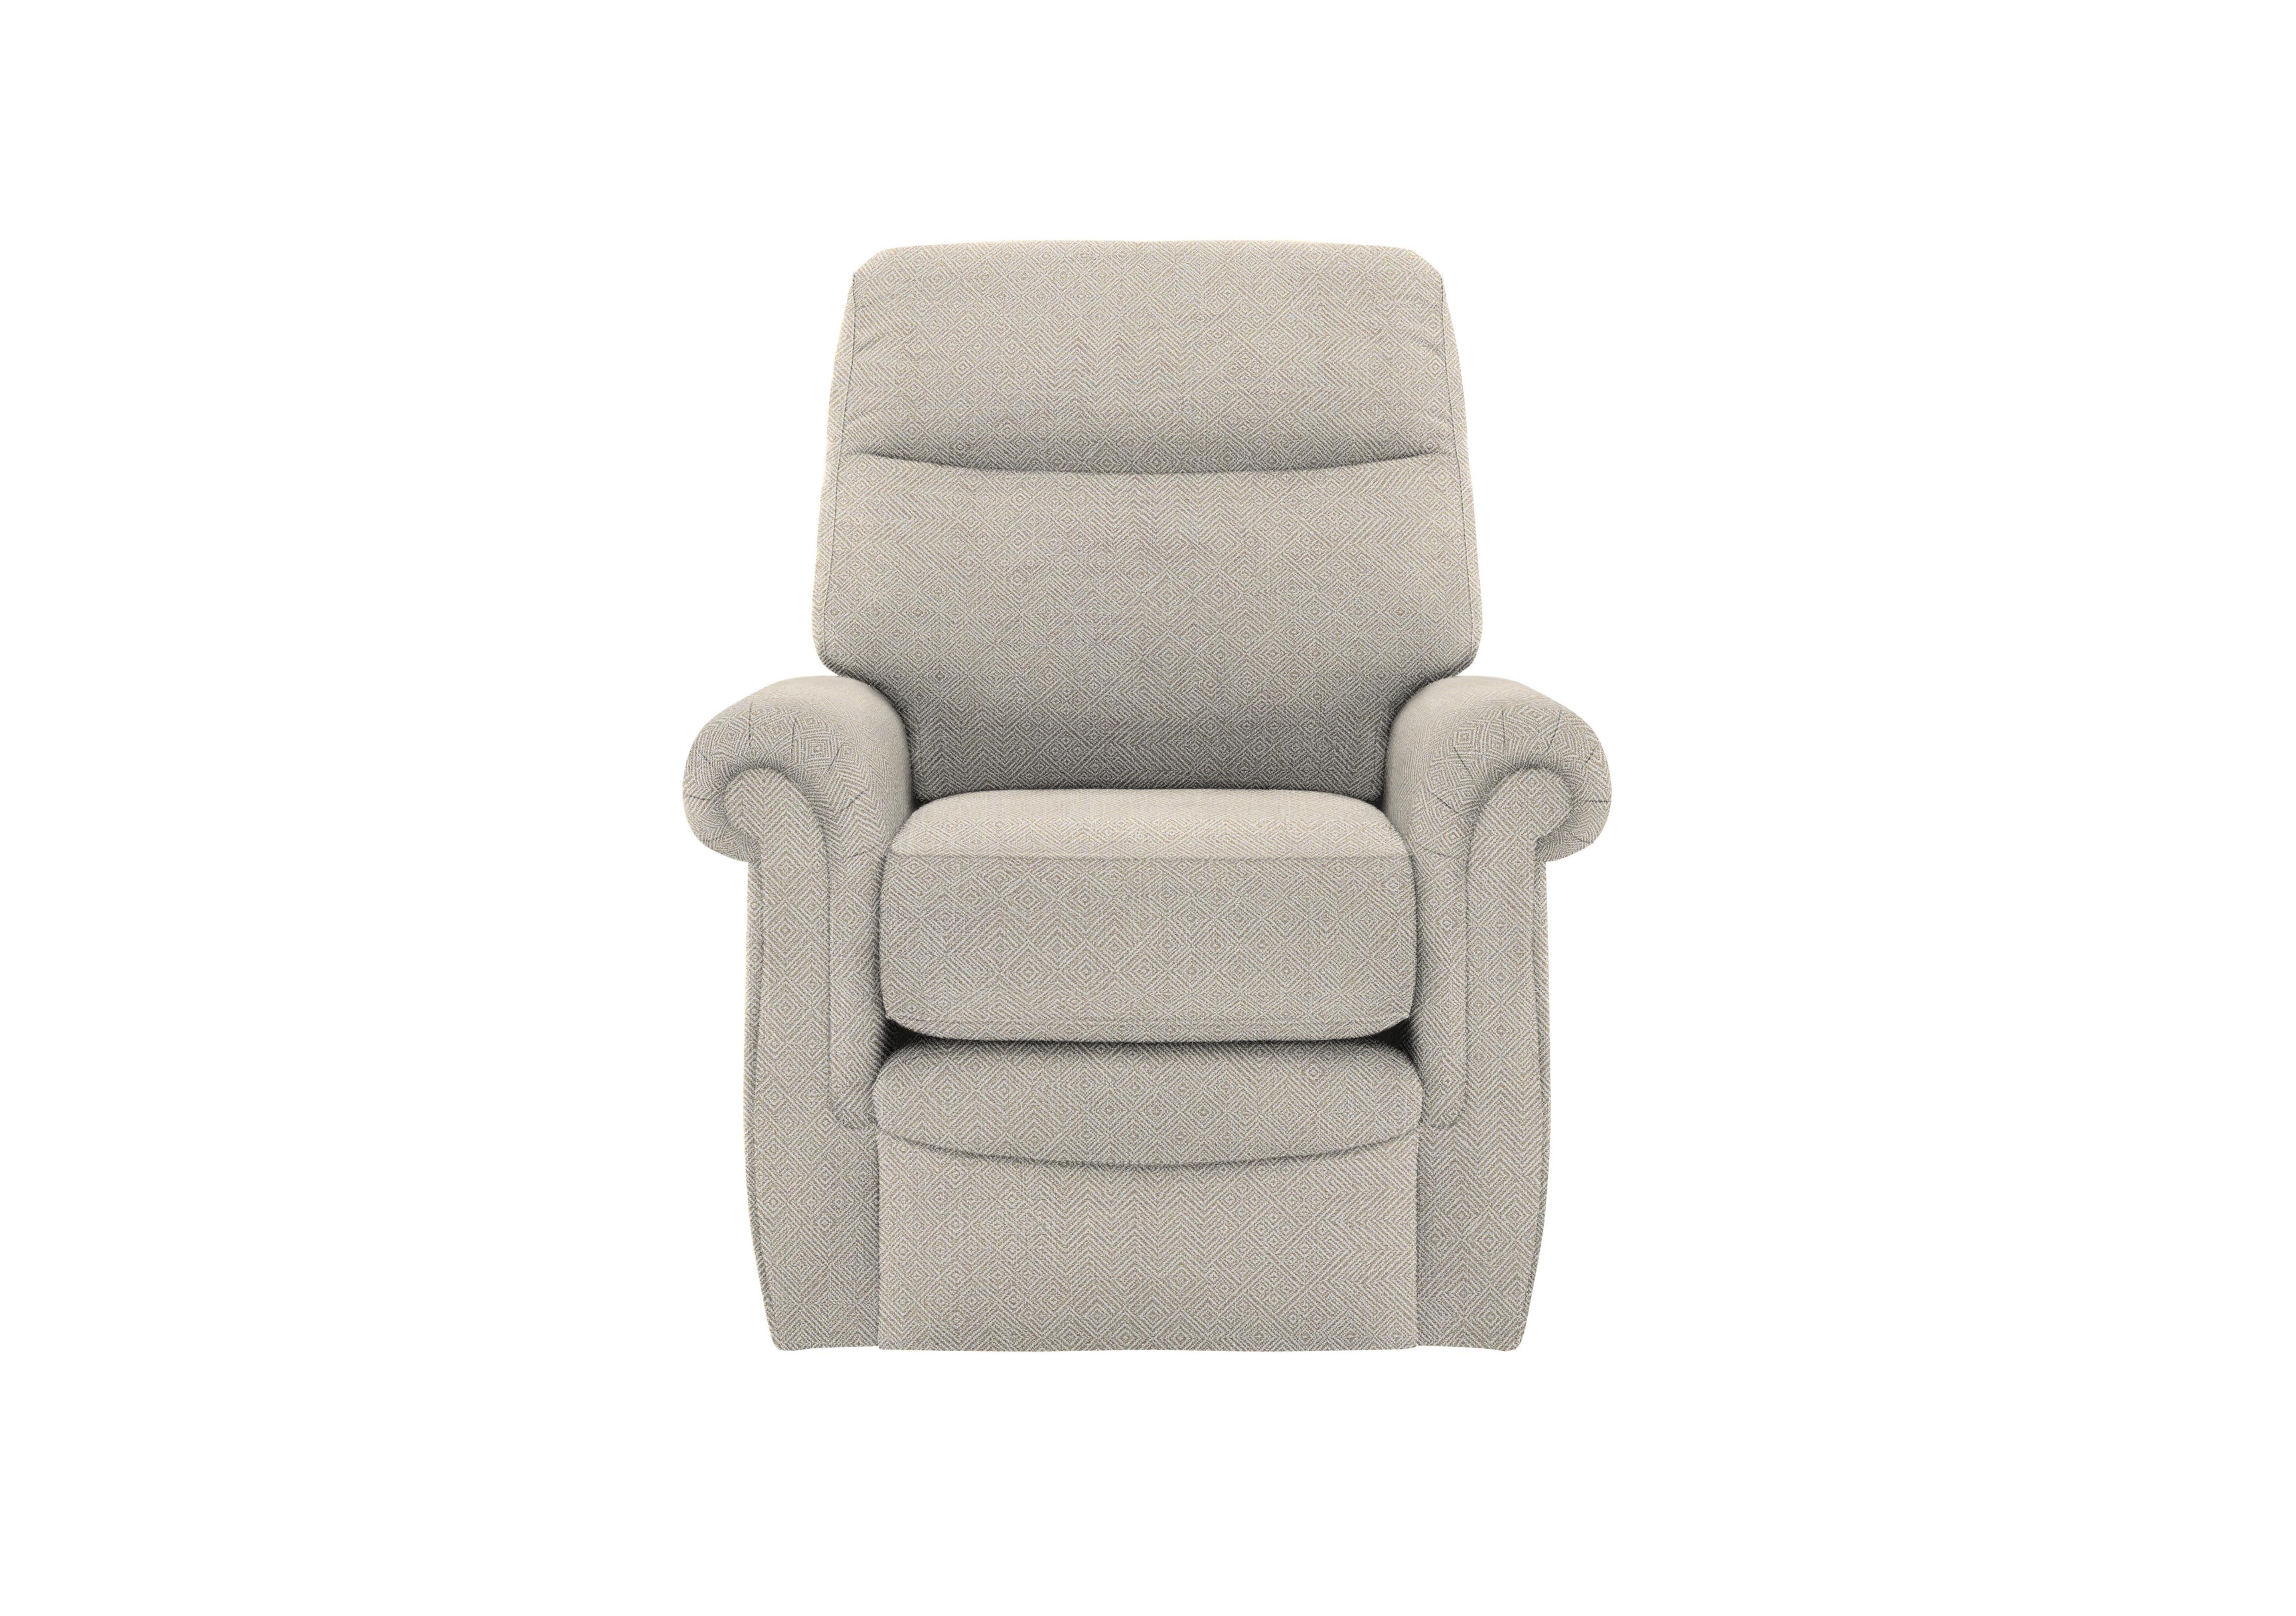 Avon Small Fabric Armchair in B011 Nebular Blush on Furniture Village